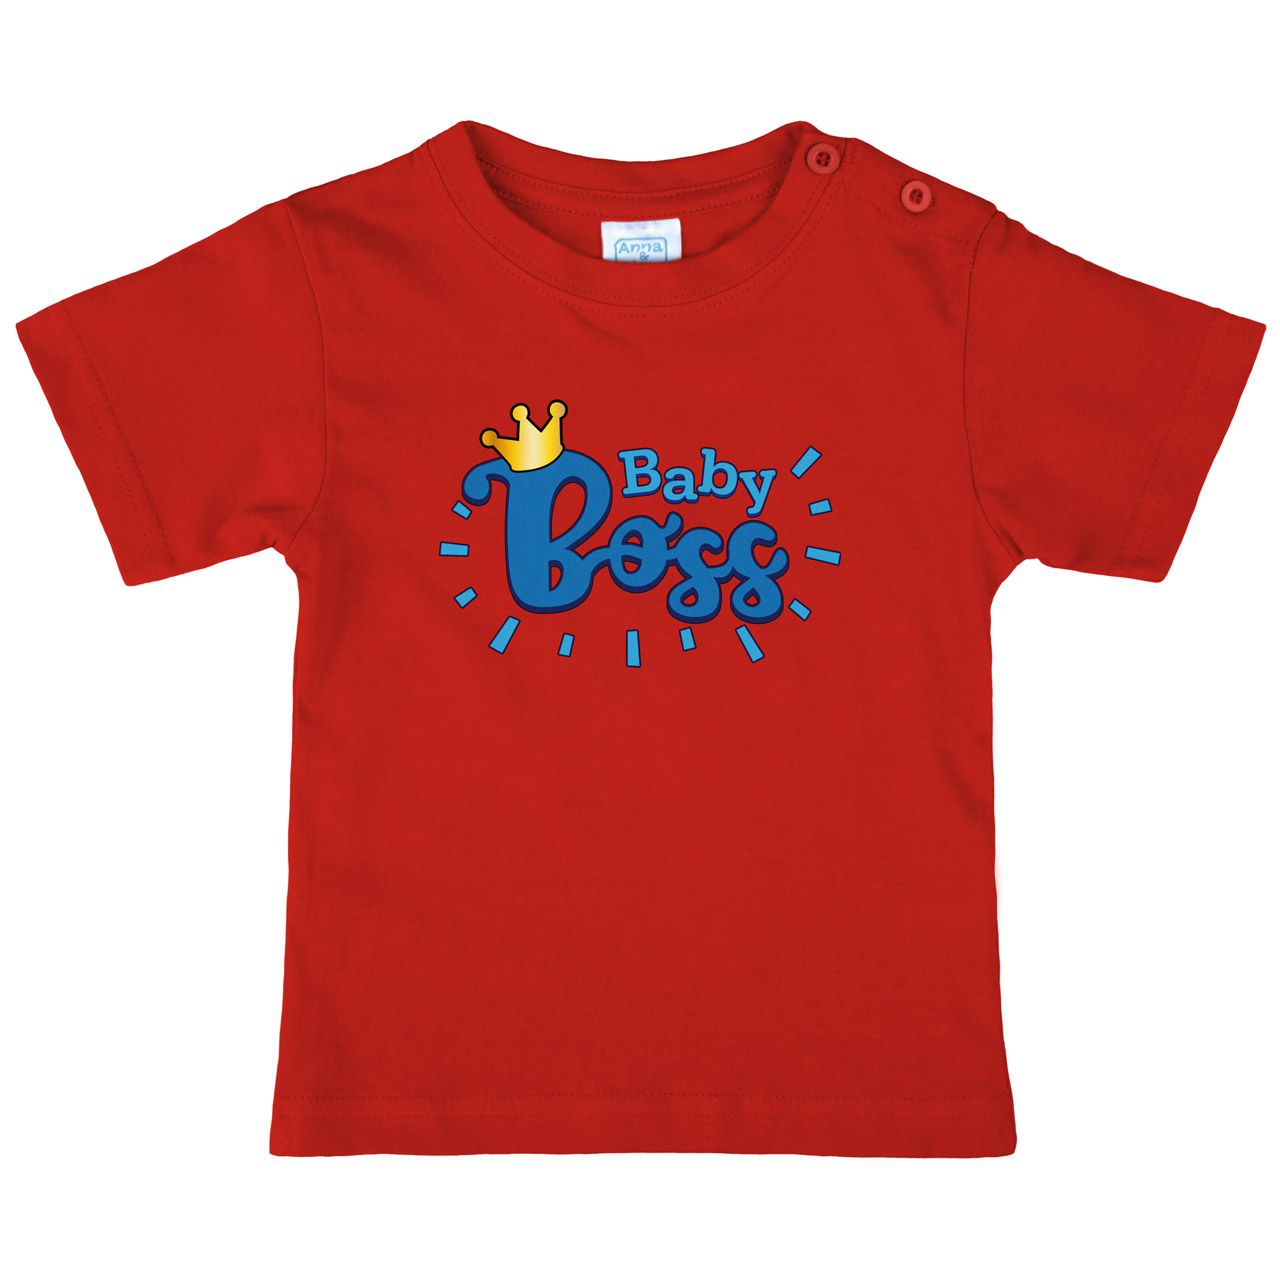 Baby Boss Blau Kinder T-Shirt rot 56 / 62